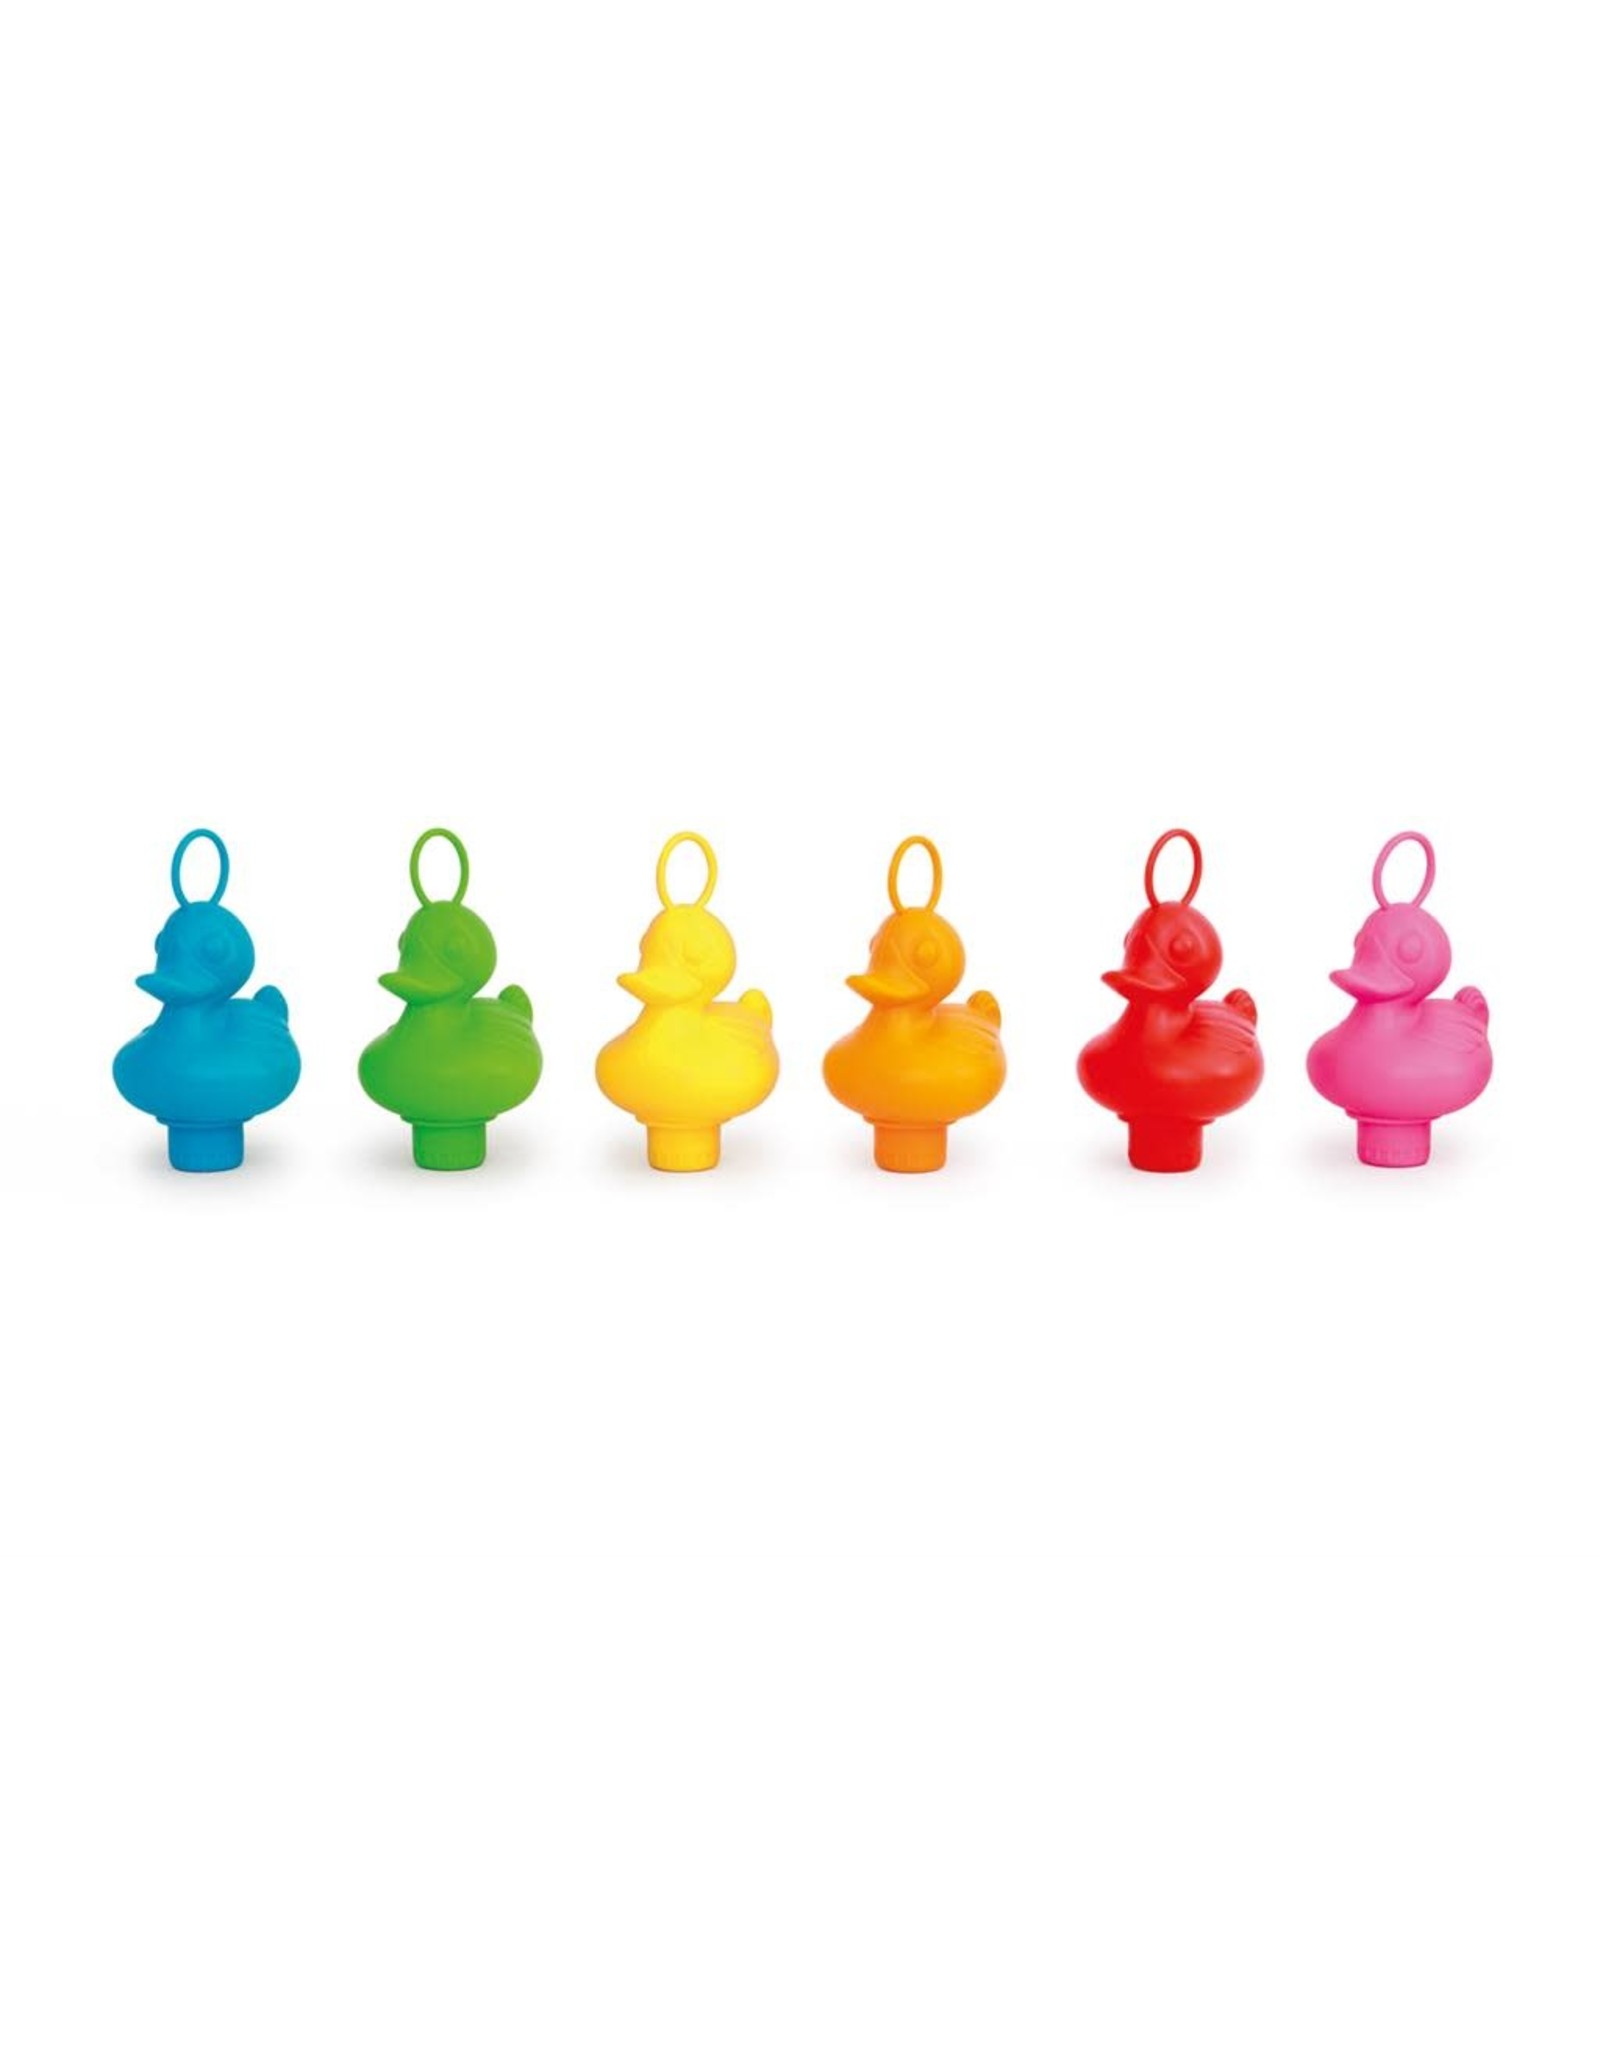 Rainbow Fishing Ducks Asst. - Wit & Whimsy Toys